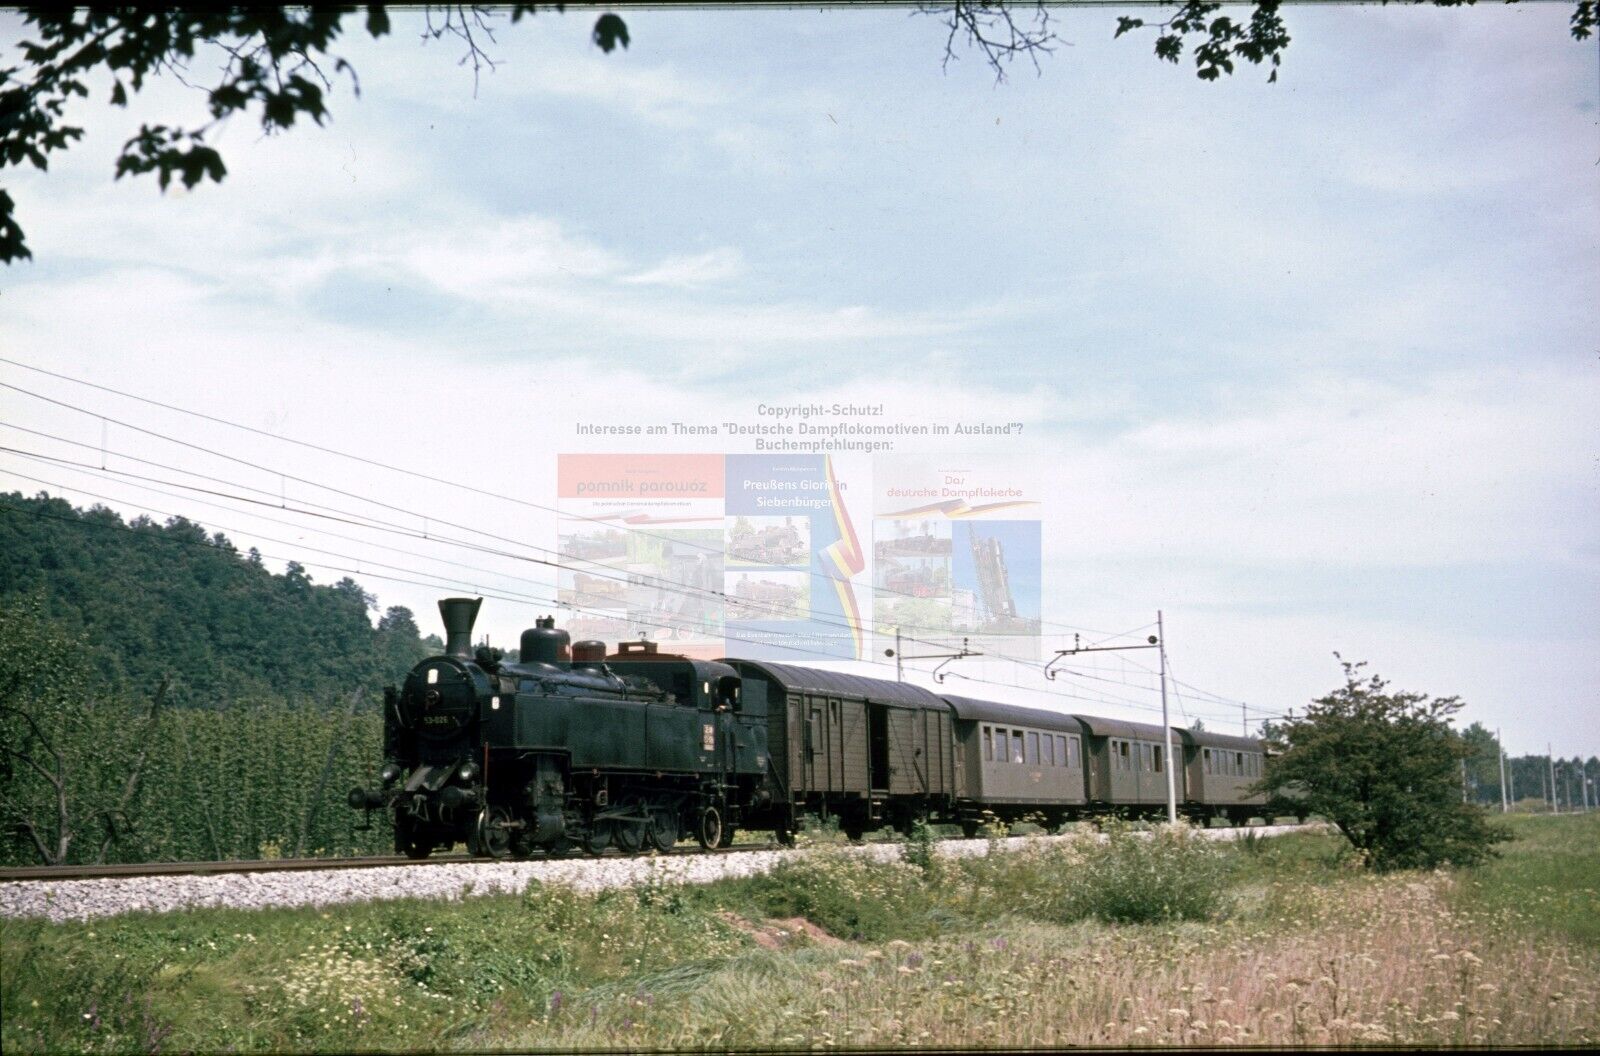 s-l1600 53-026 JZ Yugoslavia border AT 197x K021-.jpg